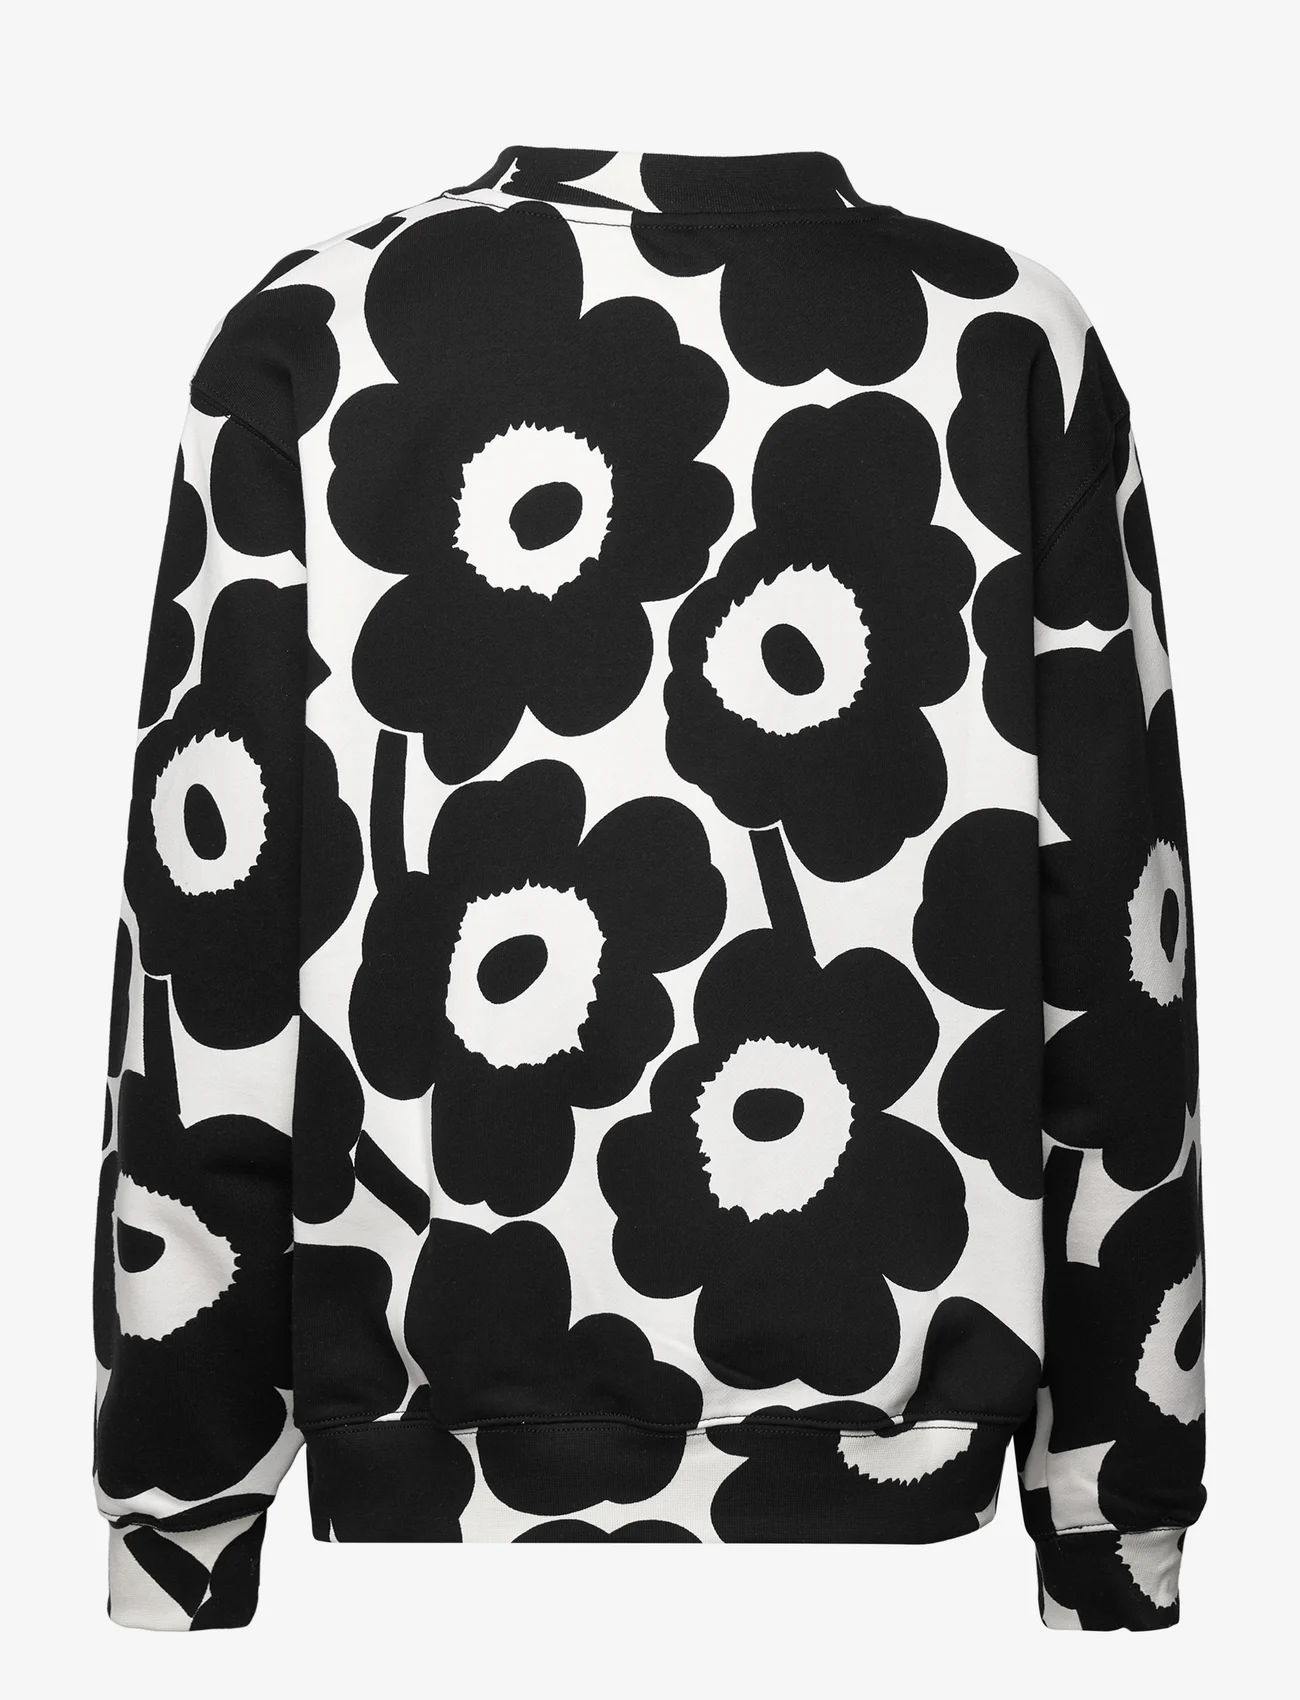 Marimekko - LEIOT PIENI UNIKKO 2 - sweatshirts & hoodies - black, off-white - 1